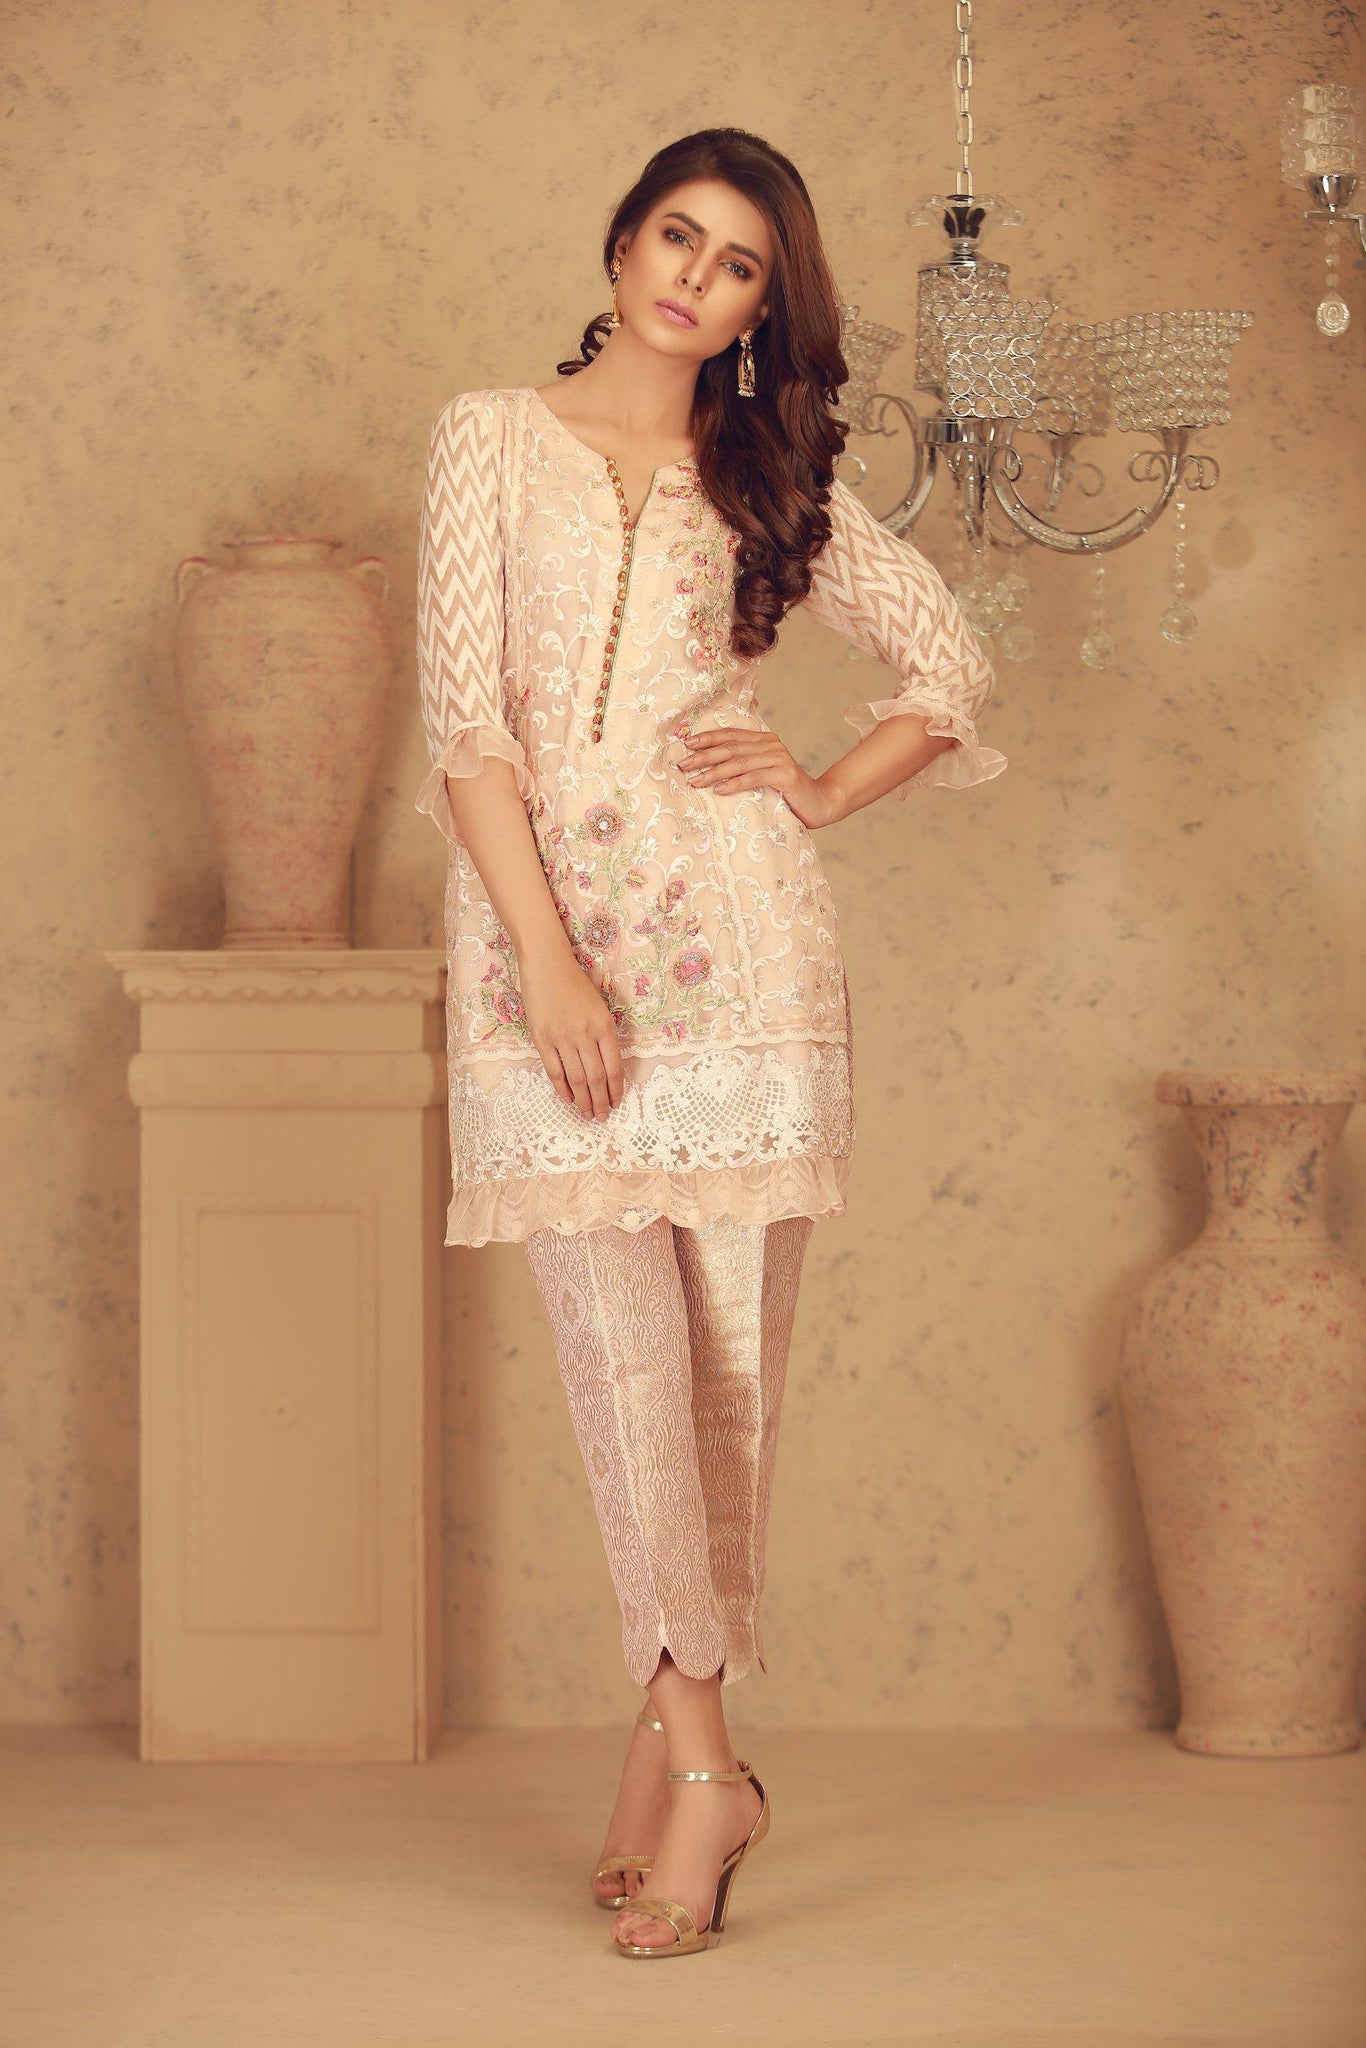 Scallop Shell | Pakistani Designer Outfit | Sarosh Salman